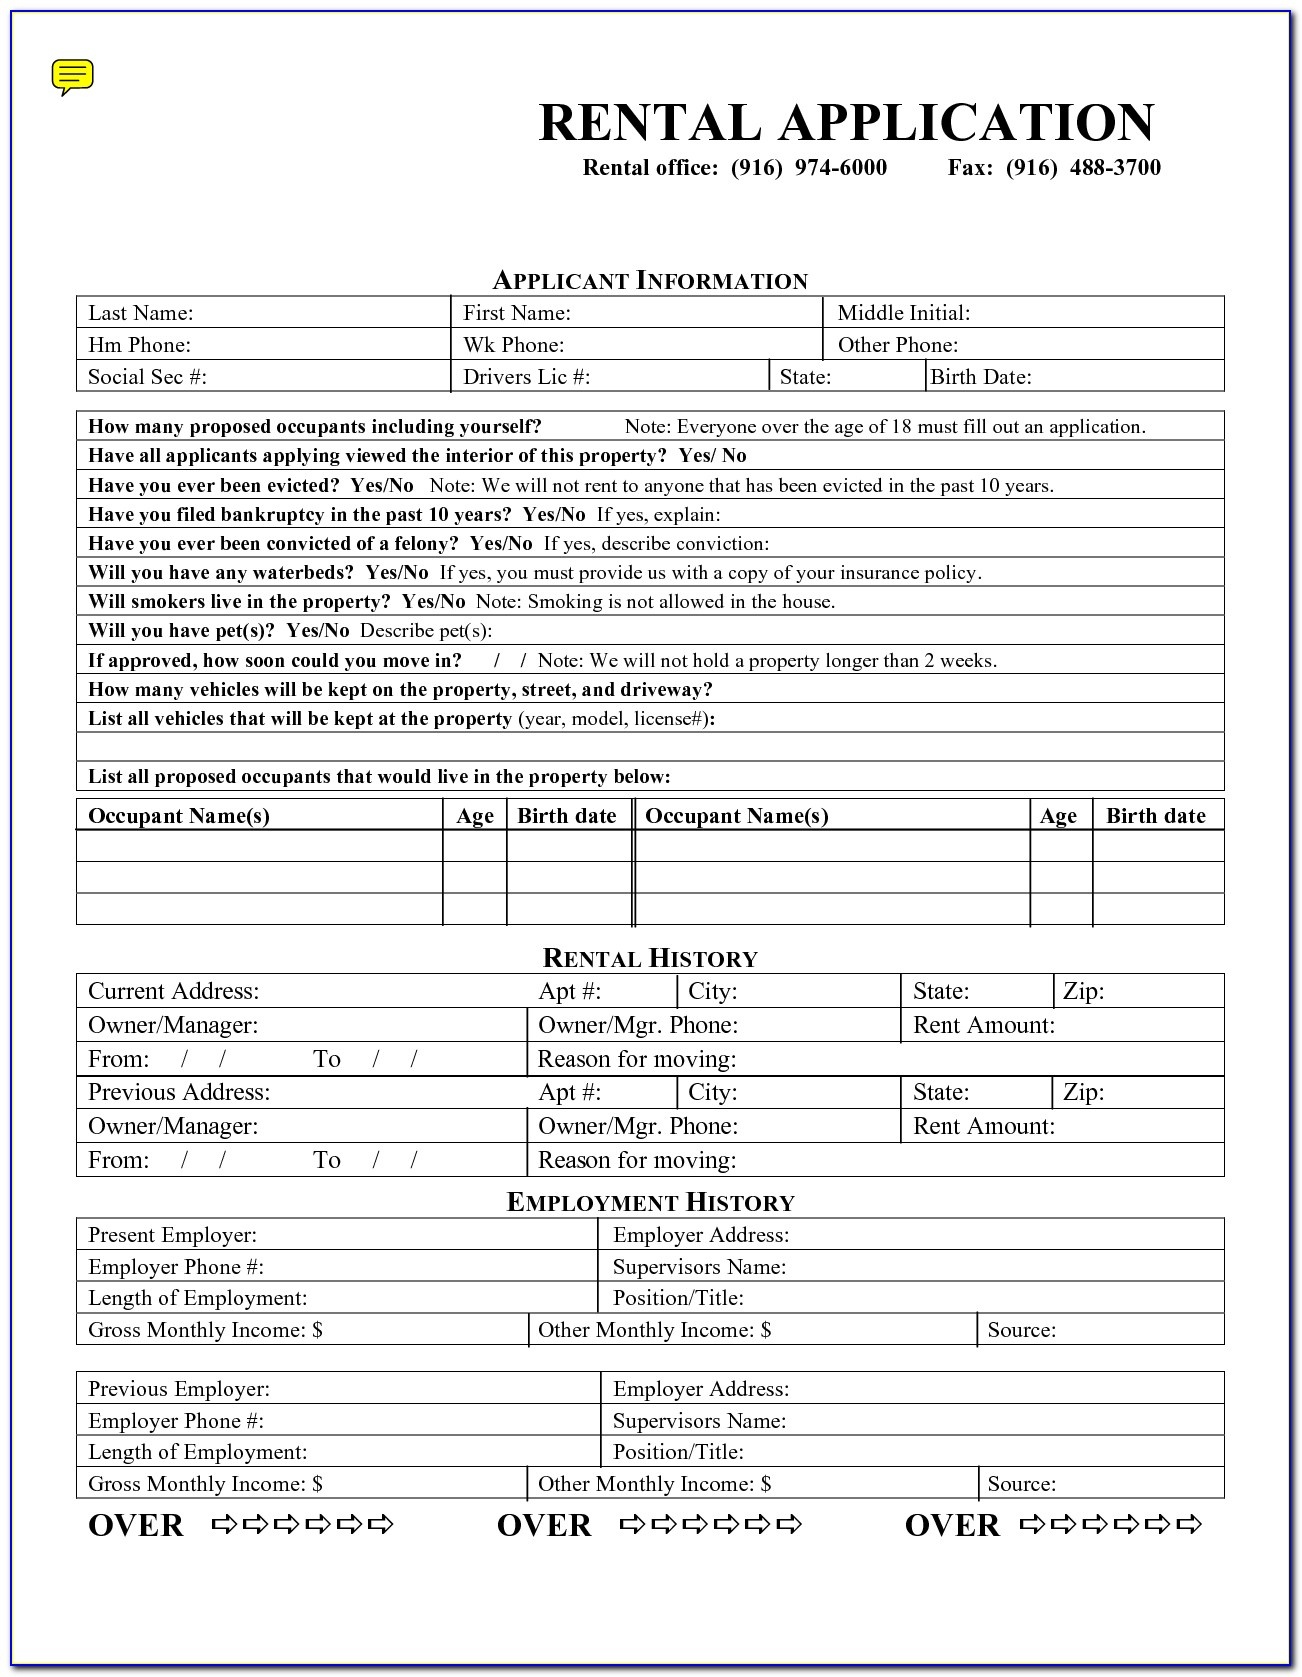 Rental Application Forms Free Printable - Form : Resume Examples - Free Printable Rental Application Form